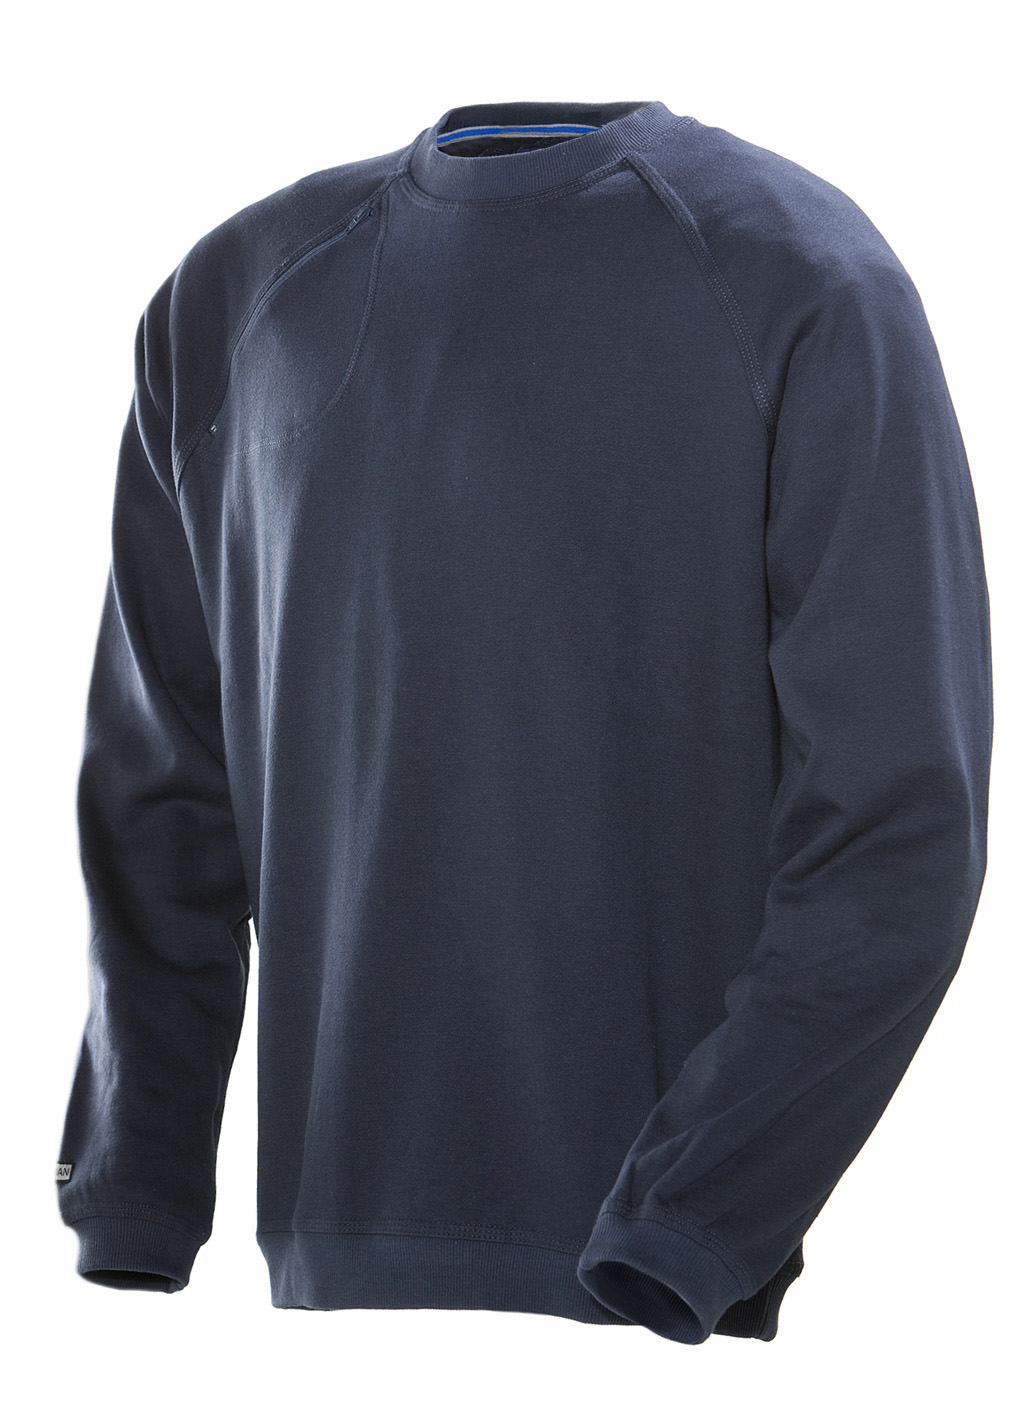 5122 Sweatshirt XS bleu marine